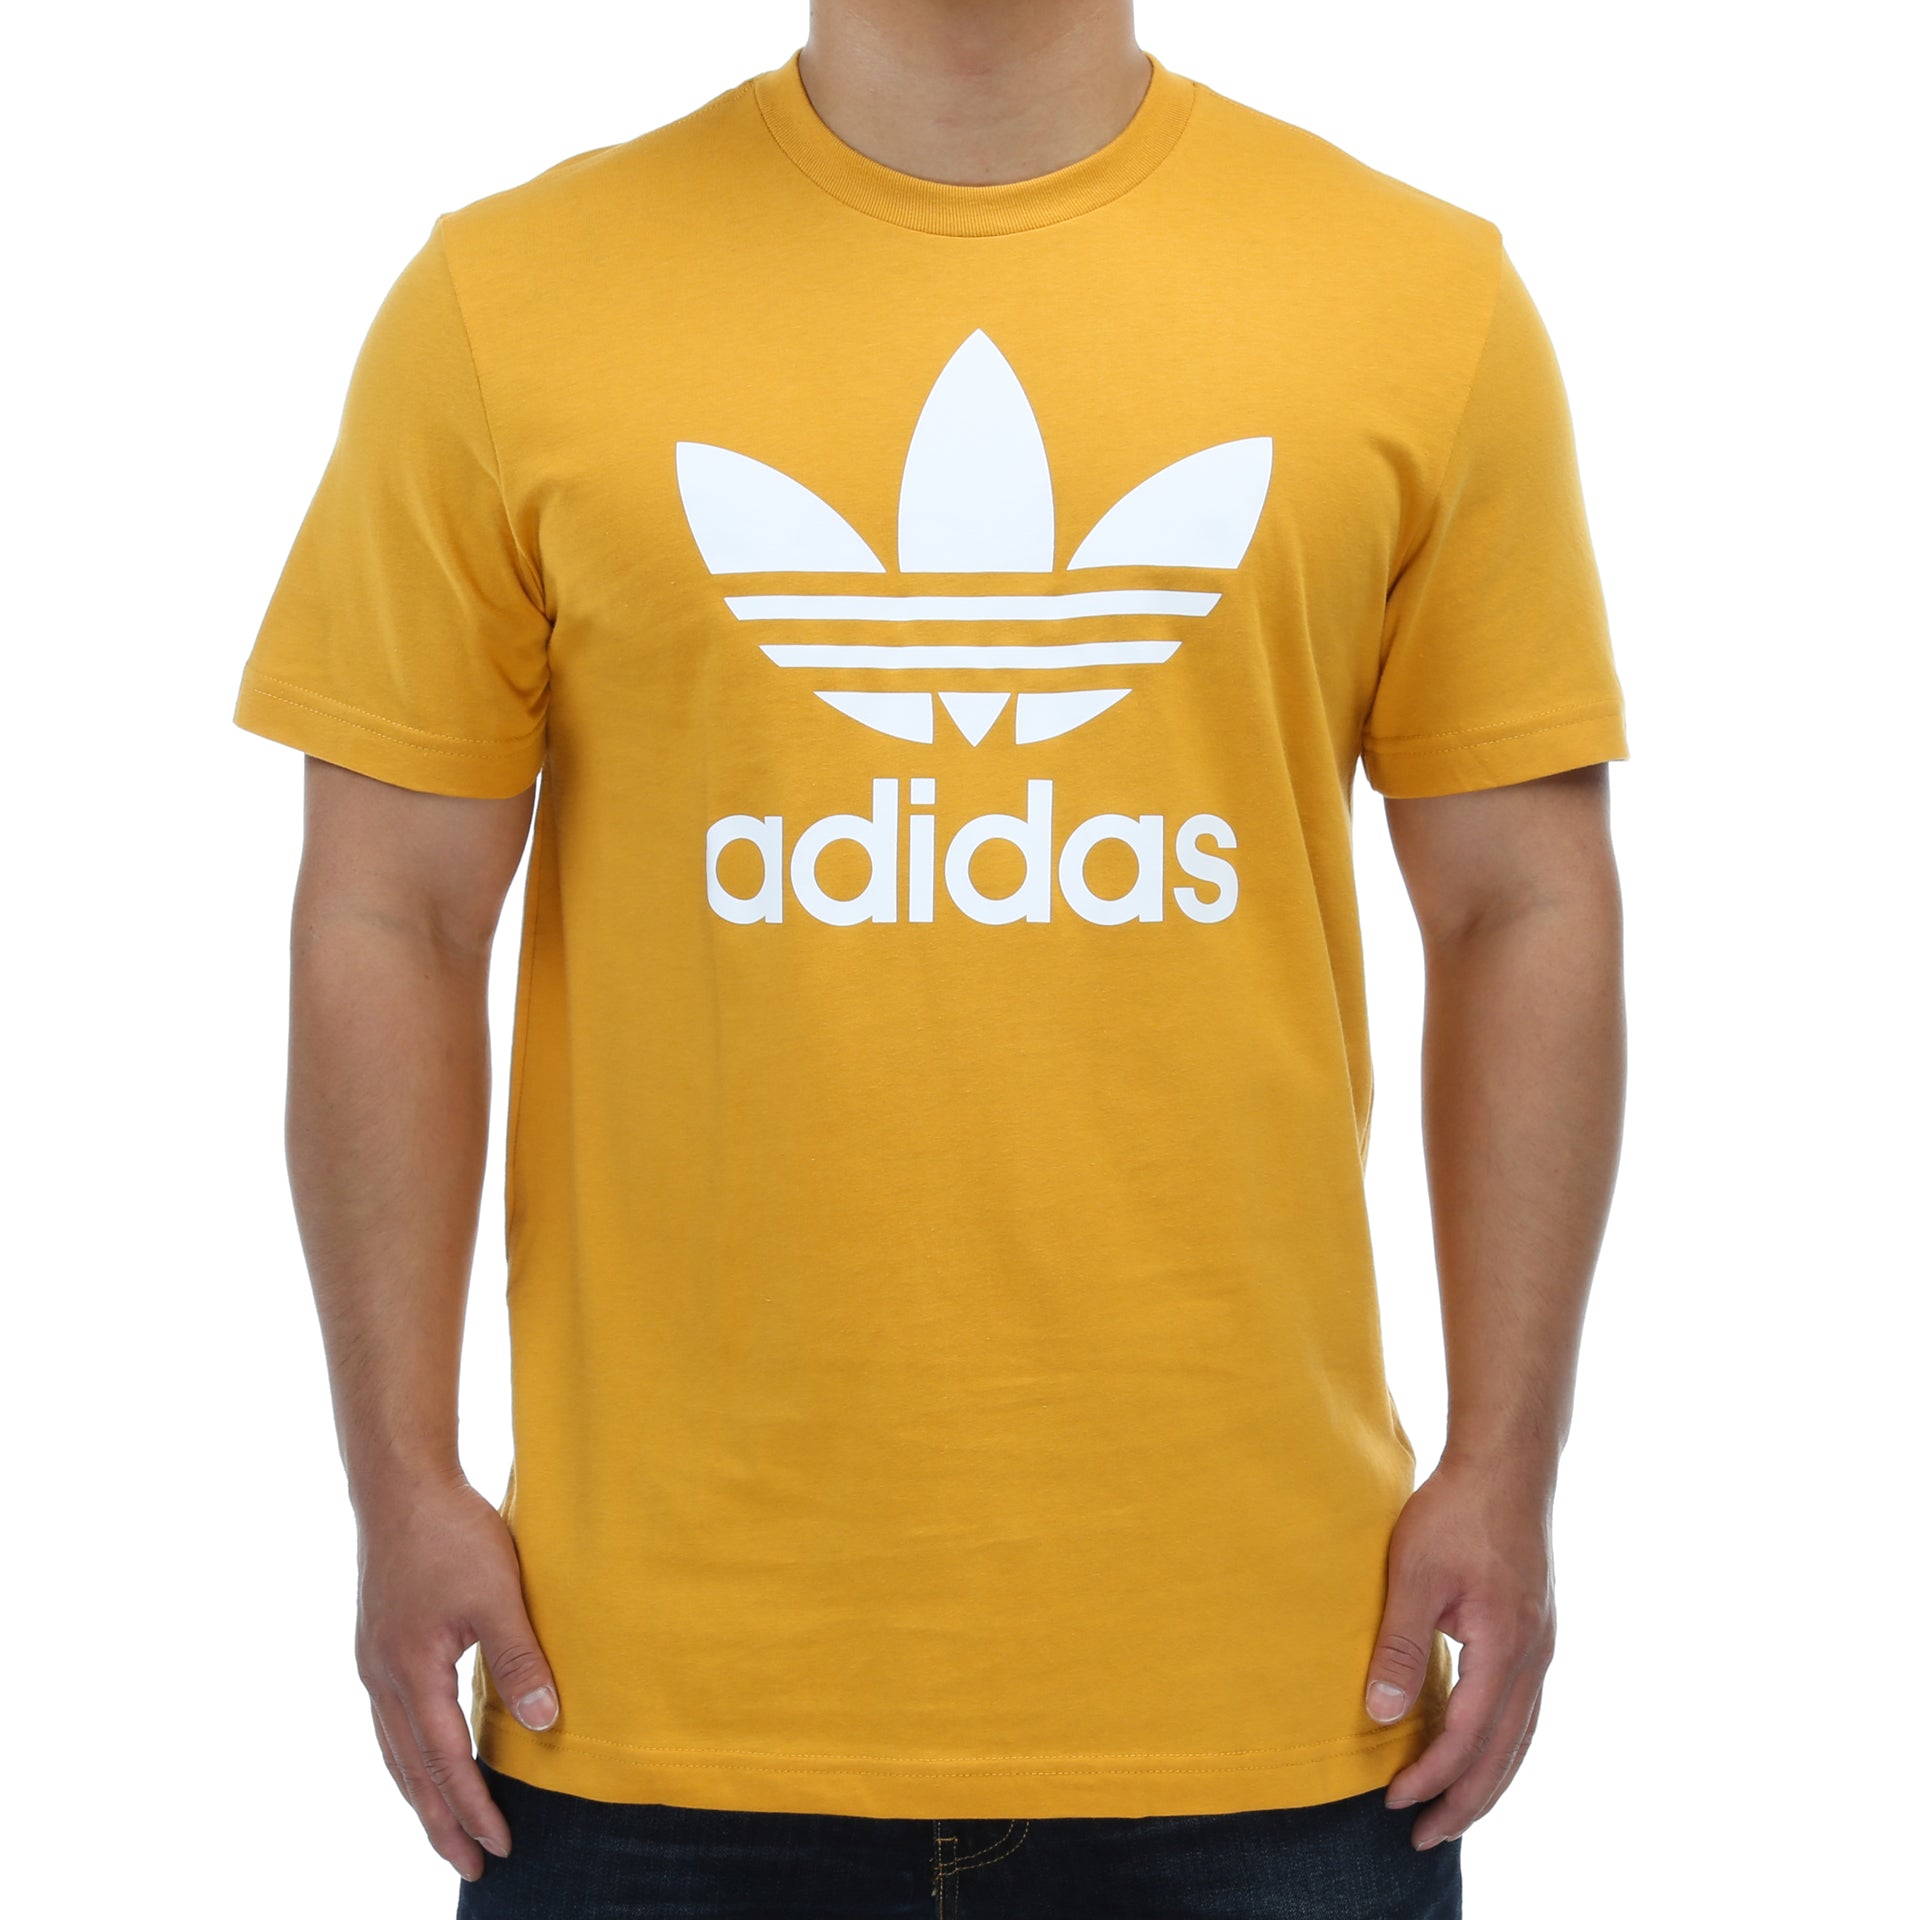 Tee Adidas Yellow - Tactile Star Trefoil - New Original